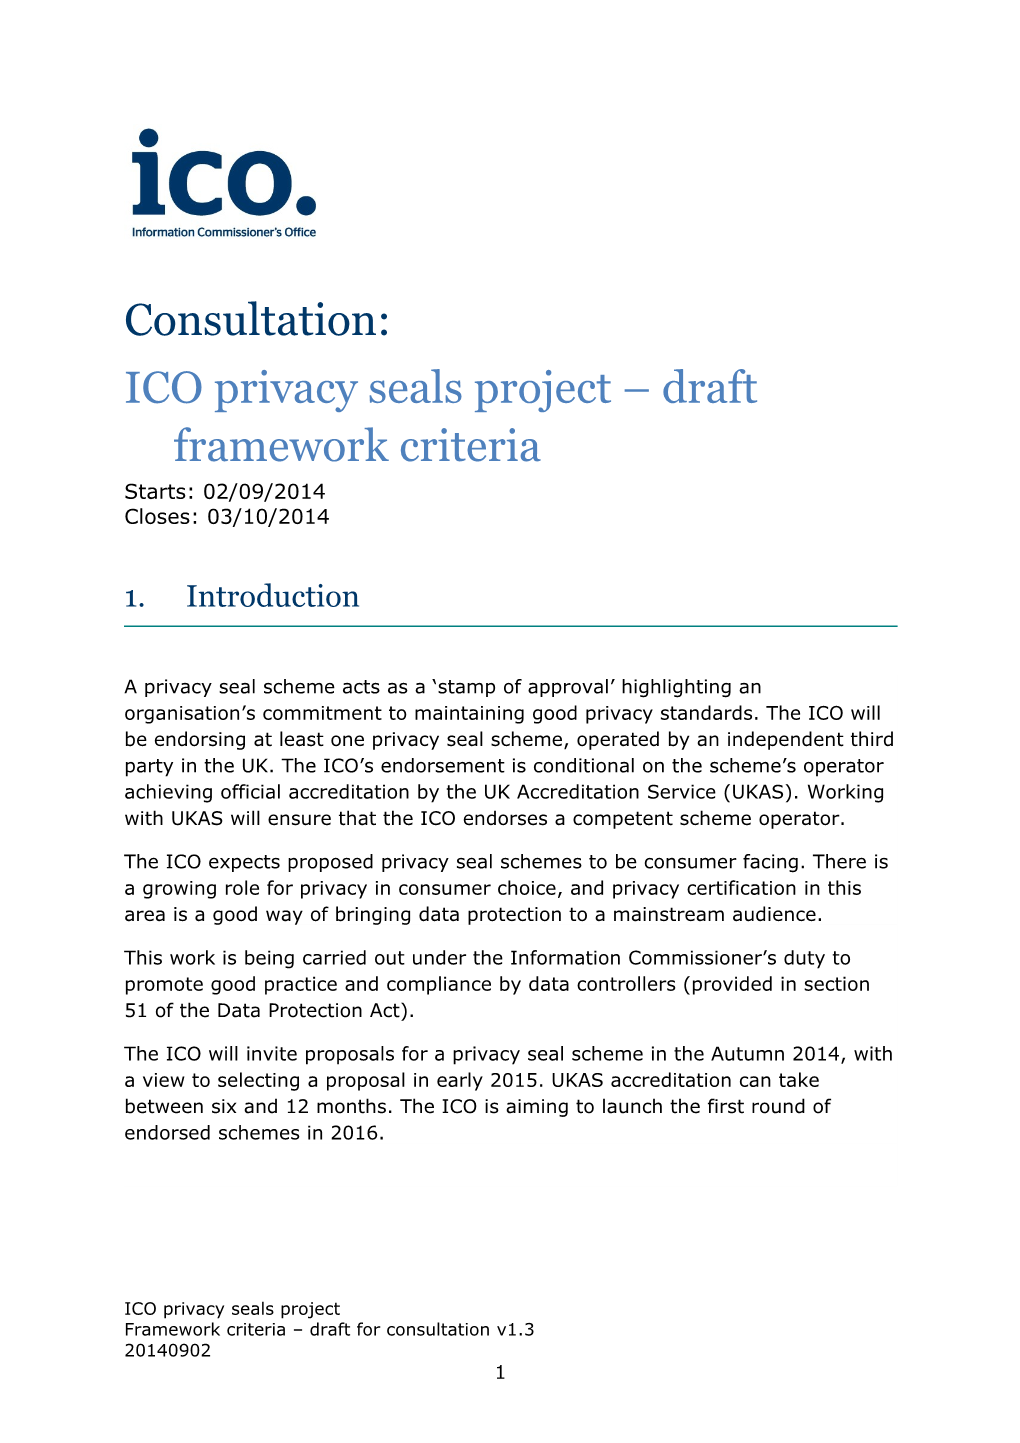 ICO Privacy Seals Project Draft Framework Criteria